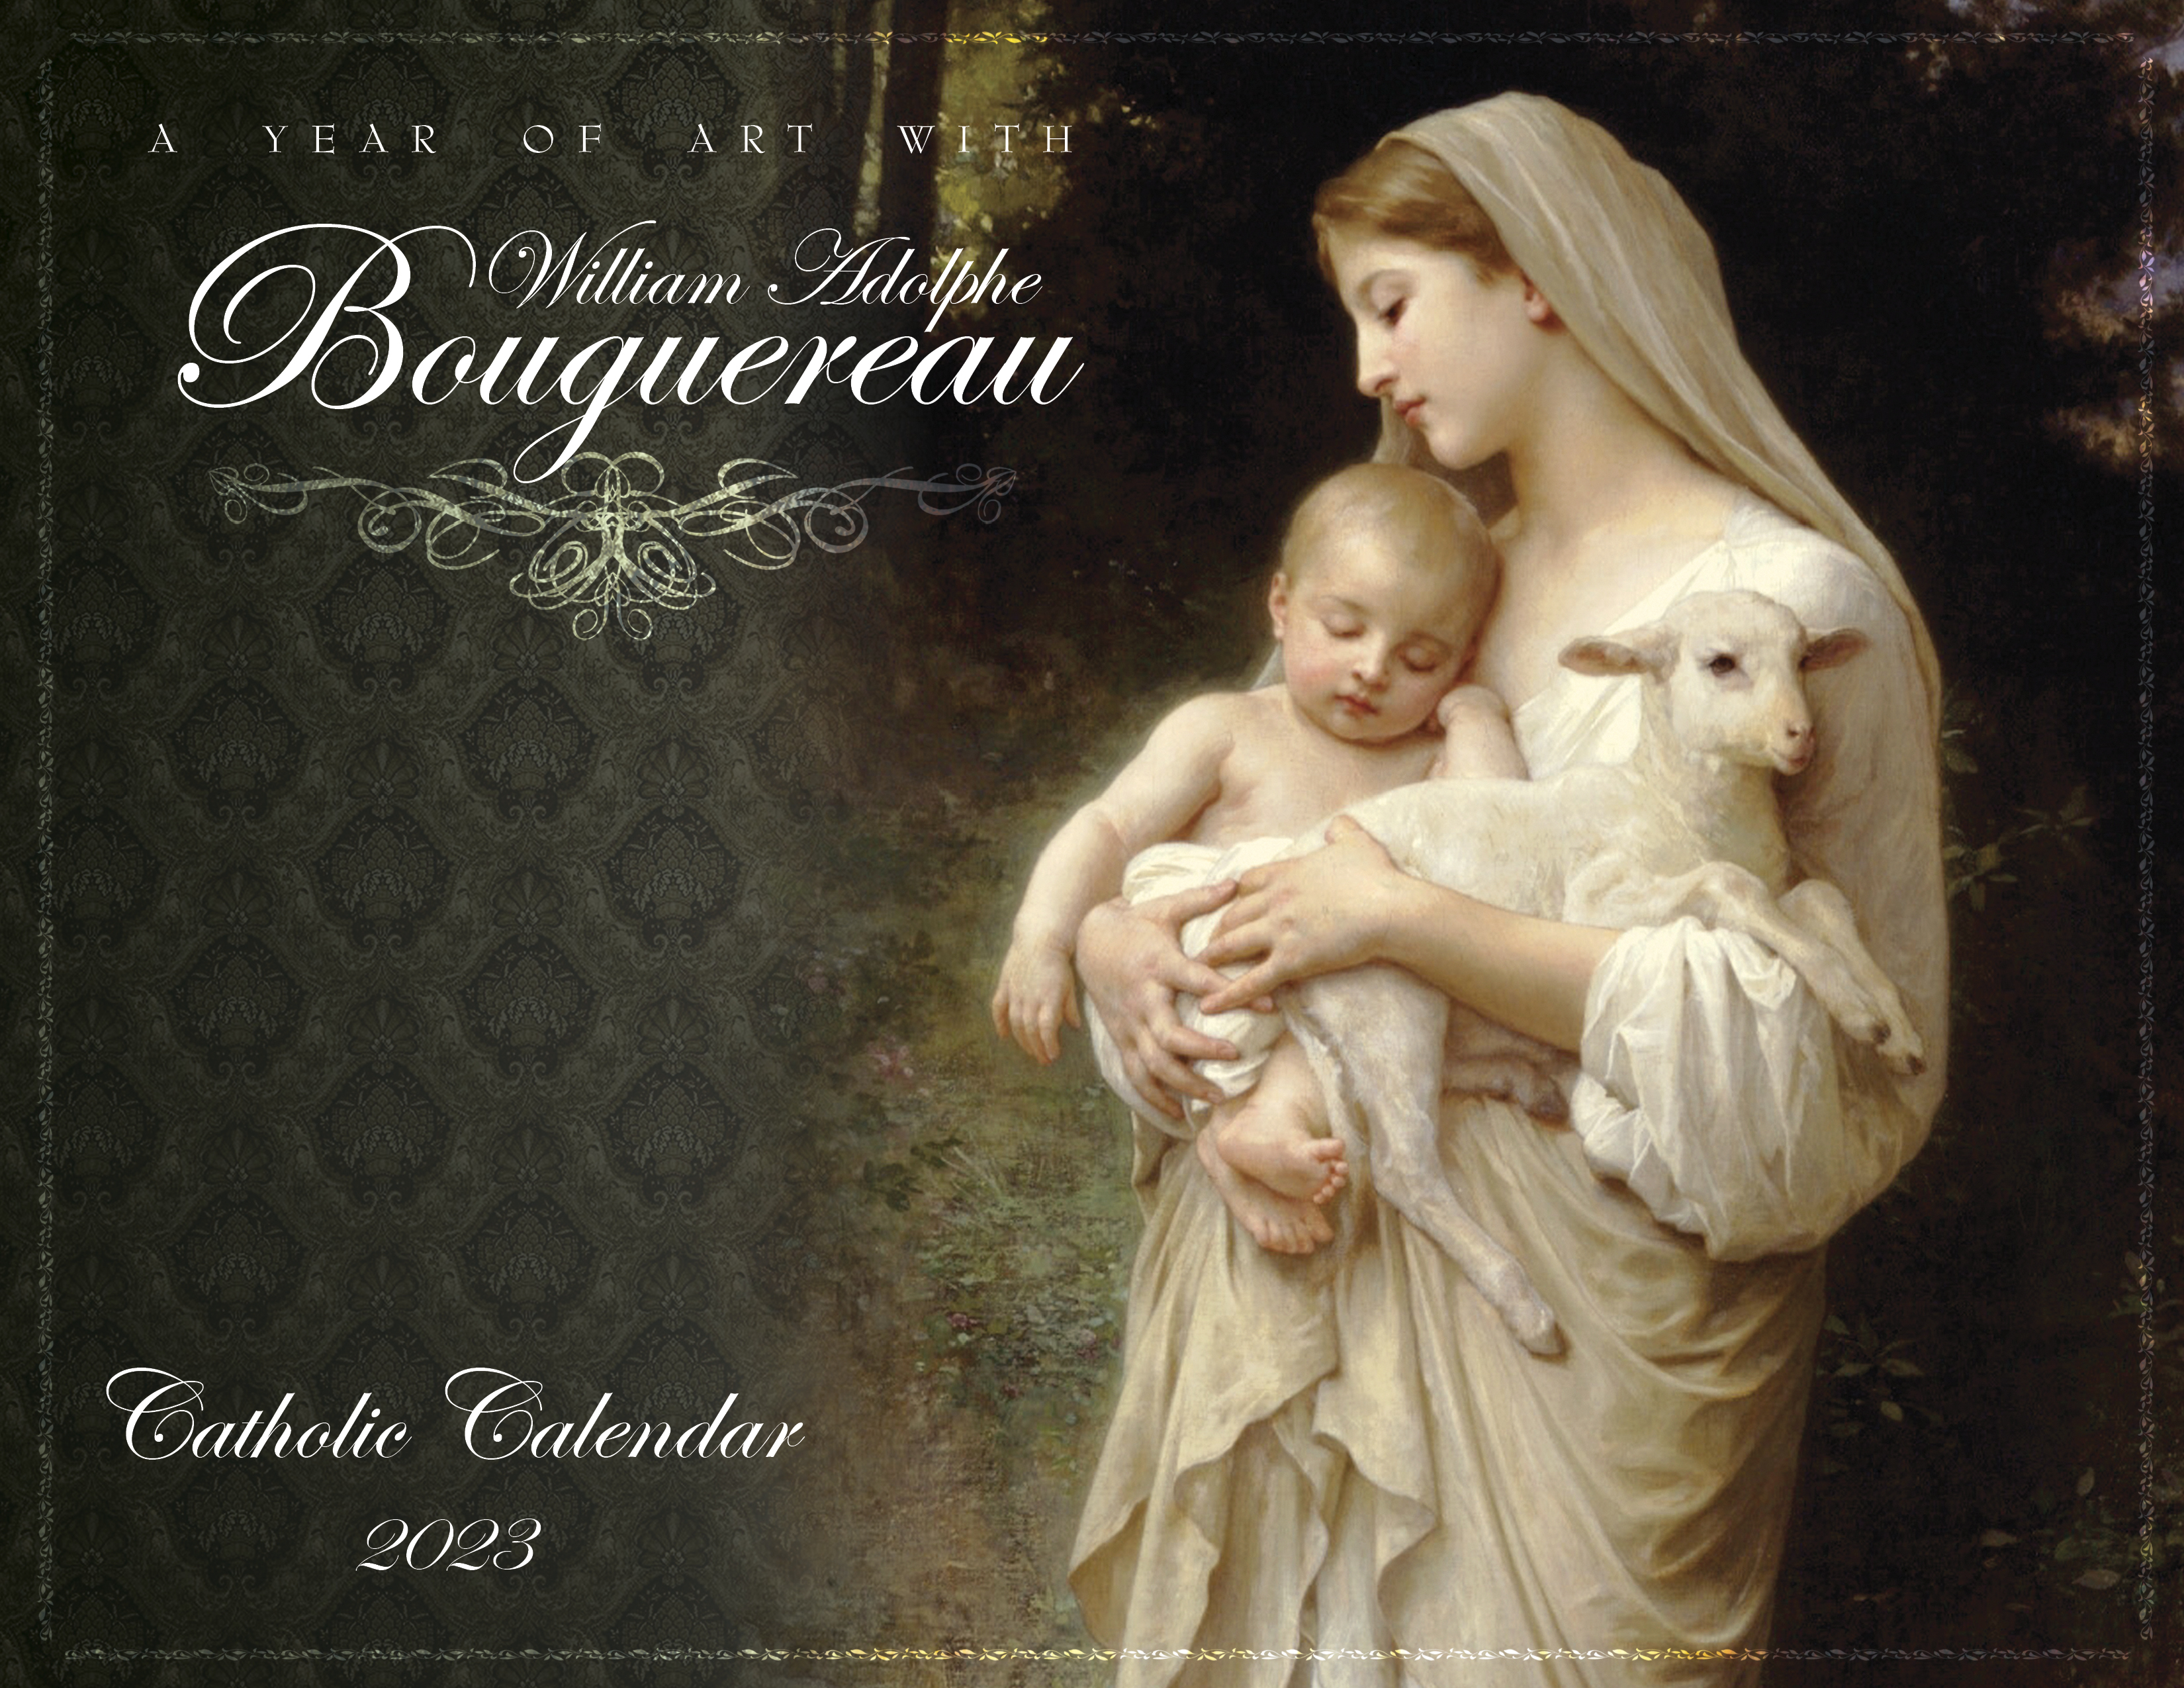 Bouguereau Calendar